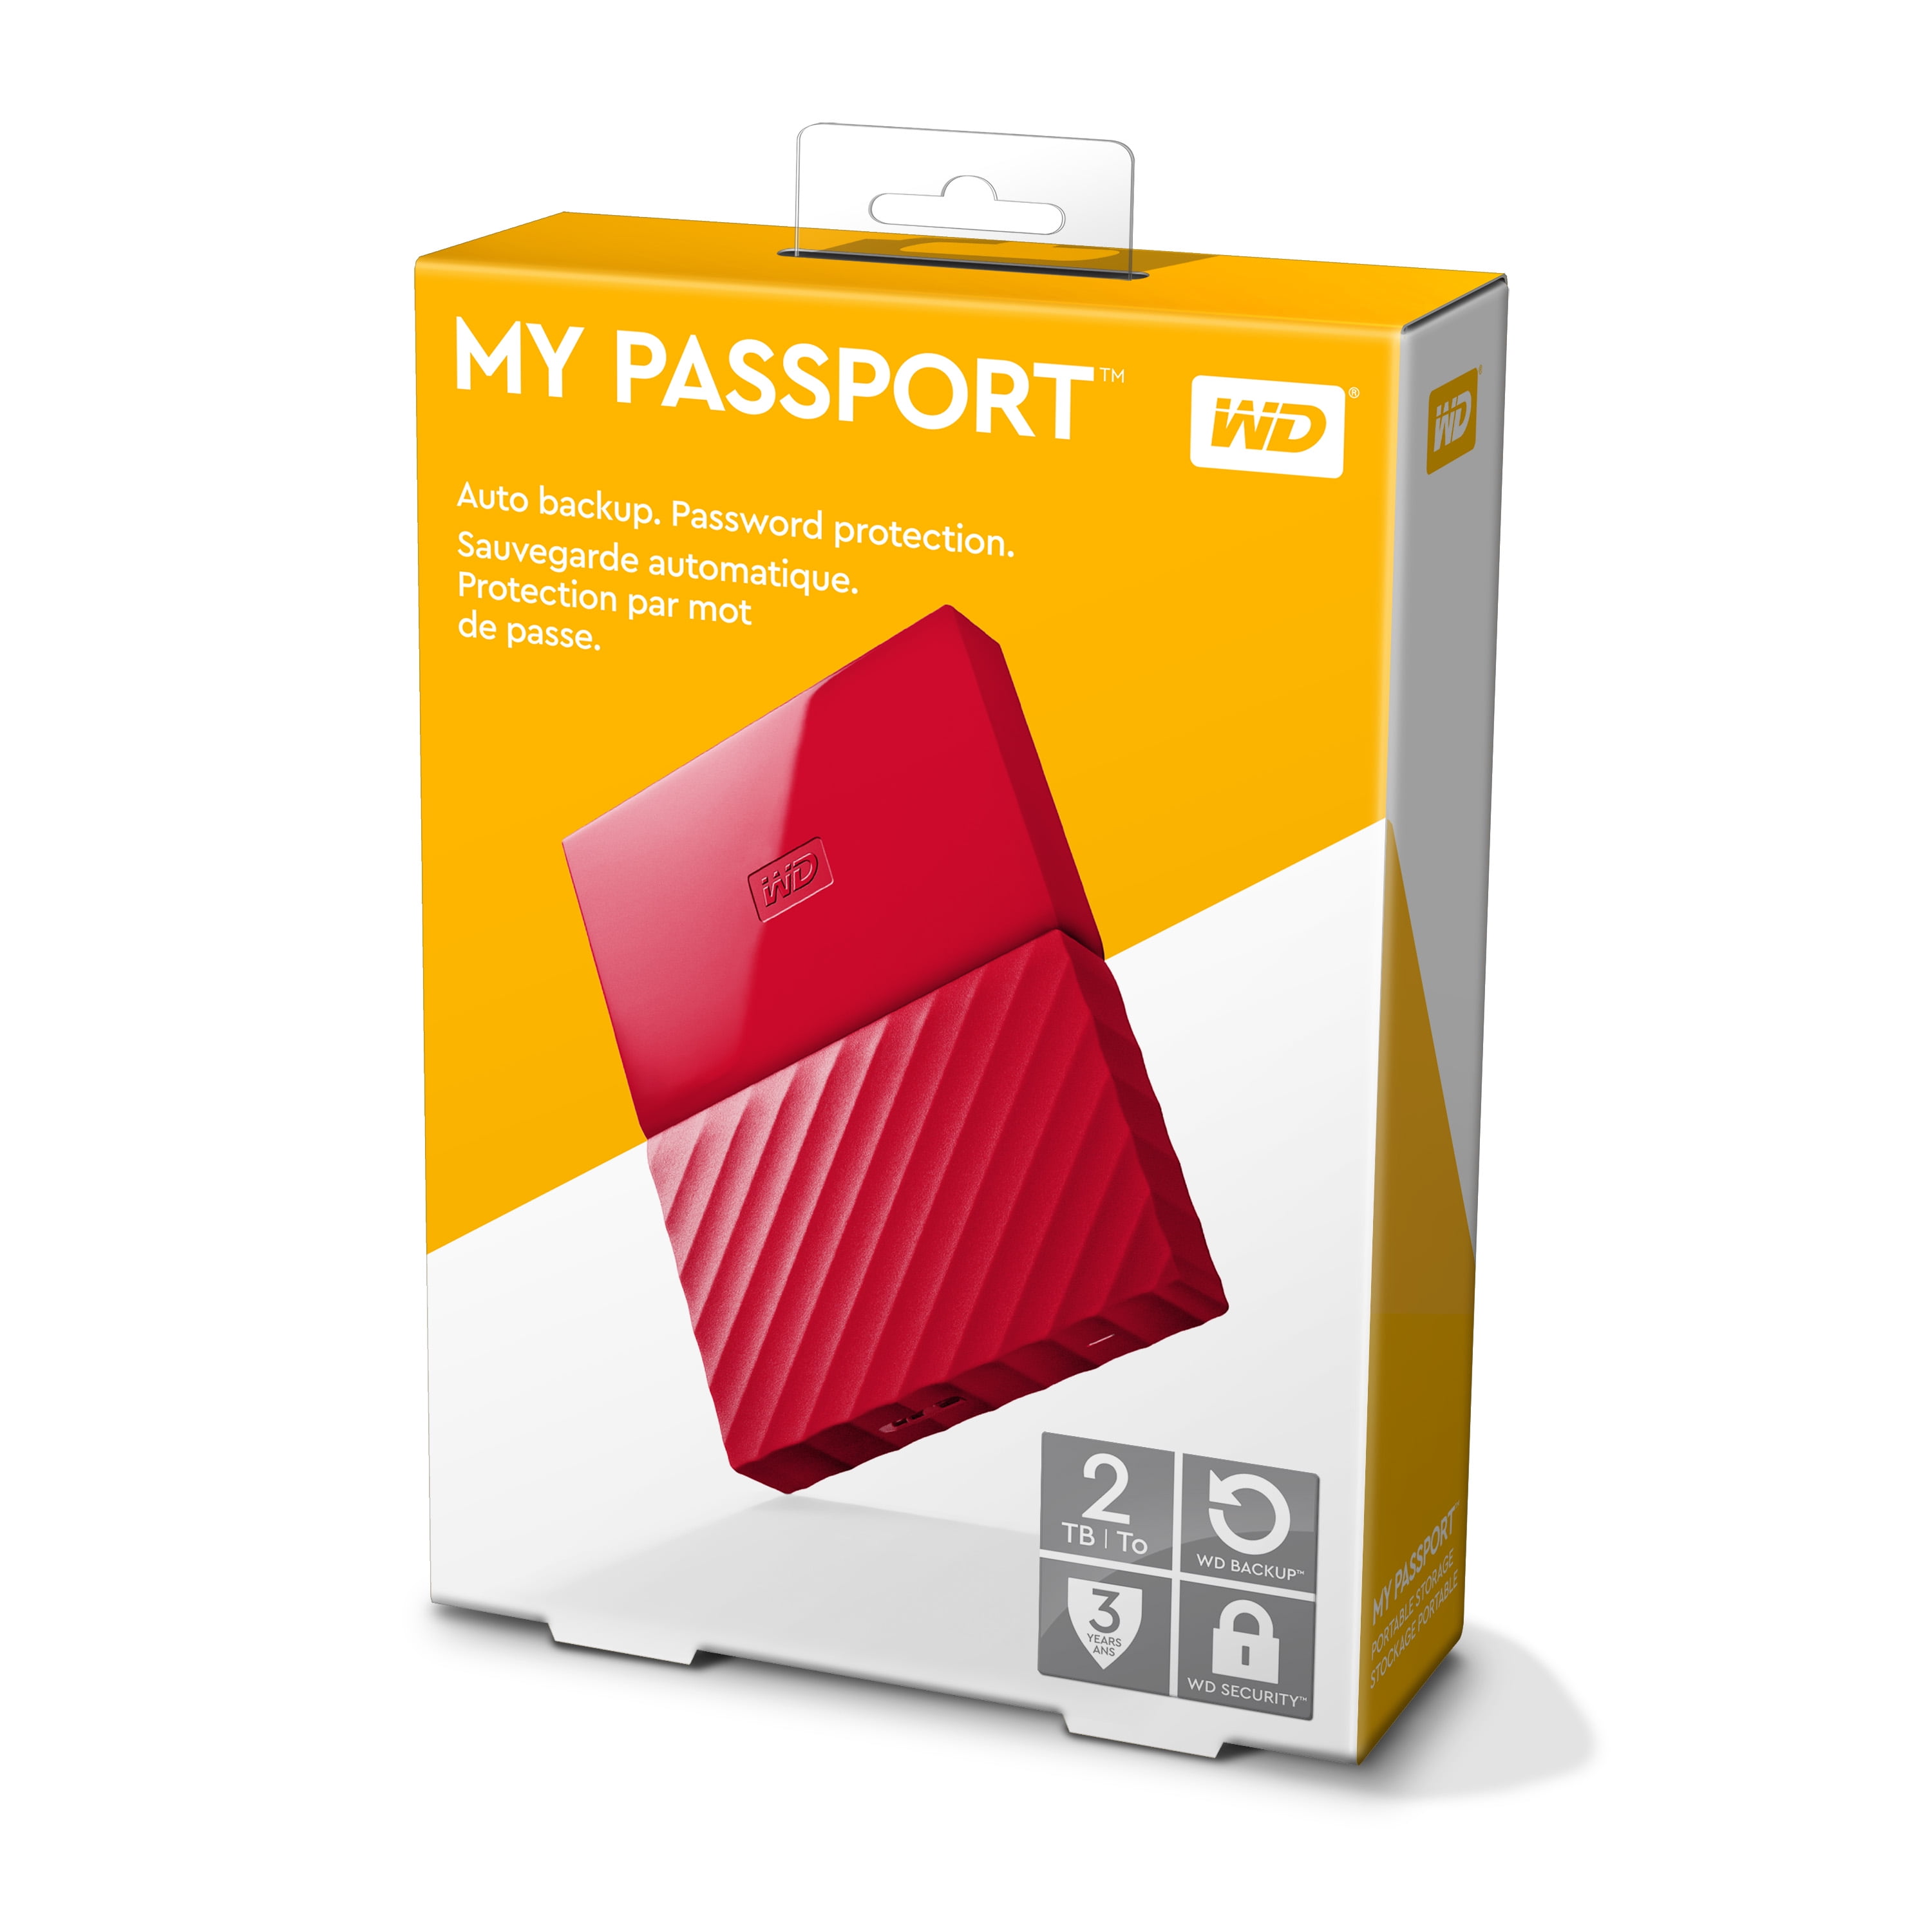 WD 2TB White My Passport External - Portable WDBYFT0020BWT-WESN 3.0 USB Hard Drive Model 